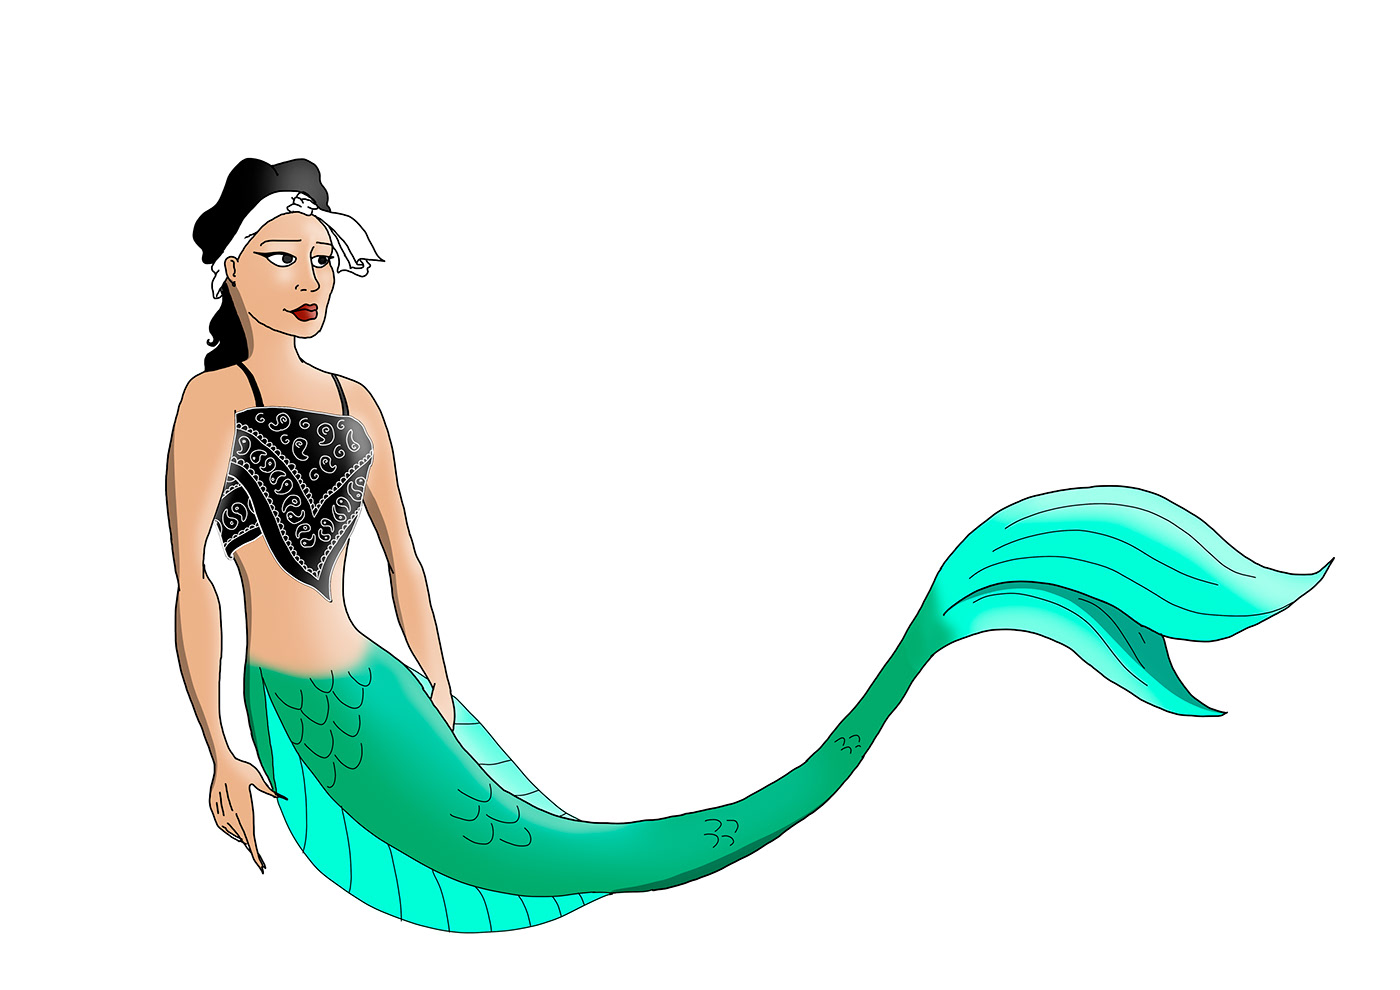 animation  Digital Art  Drawing  fantasy mermaid Movies music music videos Short films Video Editing